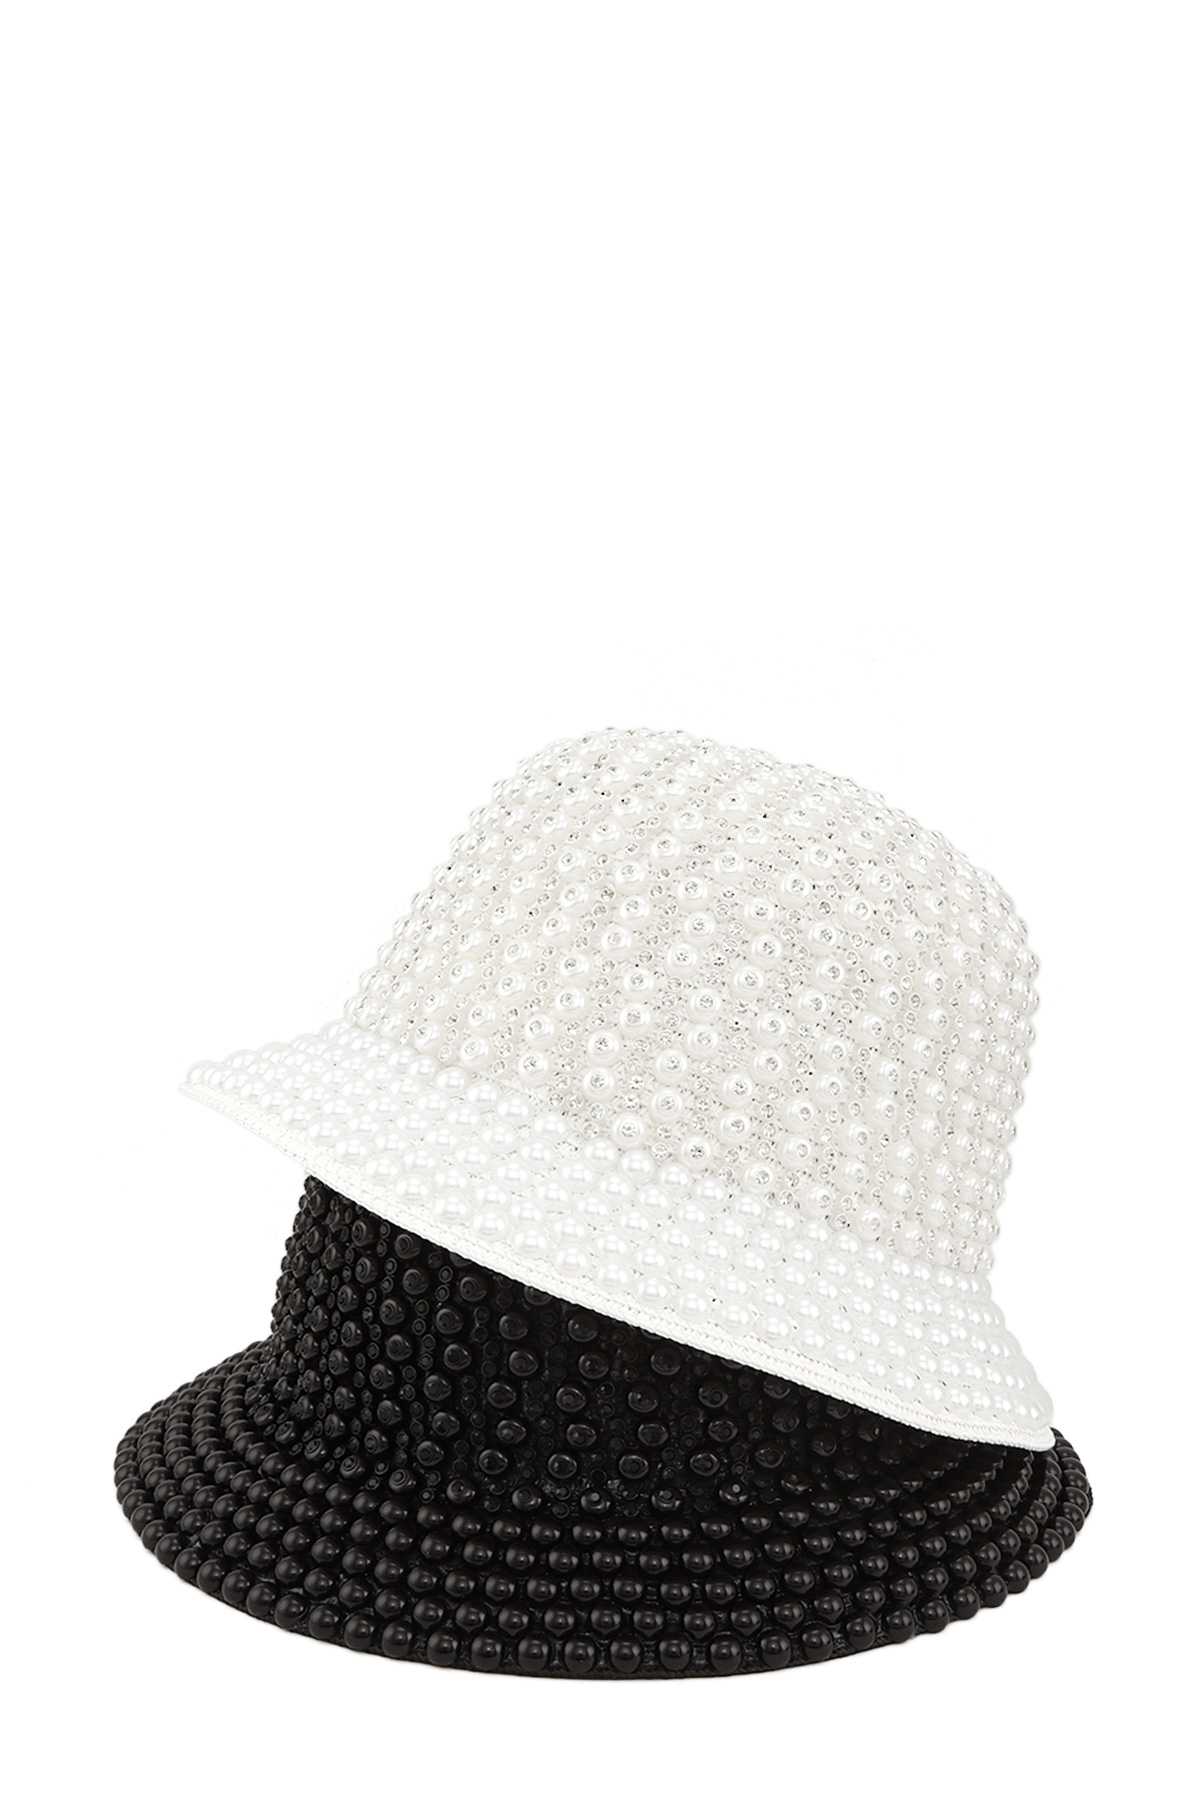 Rhinestone and Pearl Decorated Straw Hat